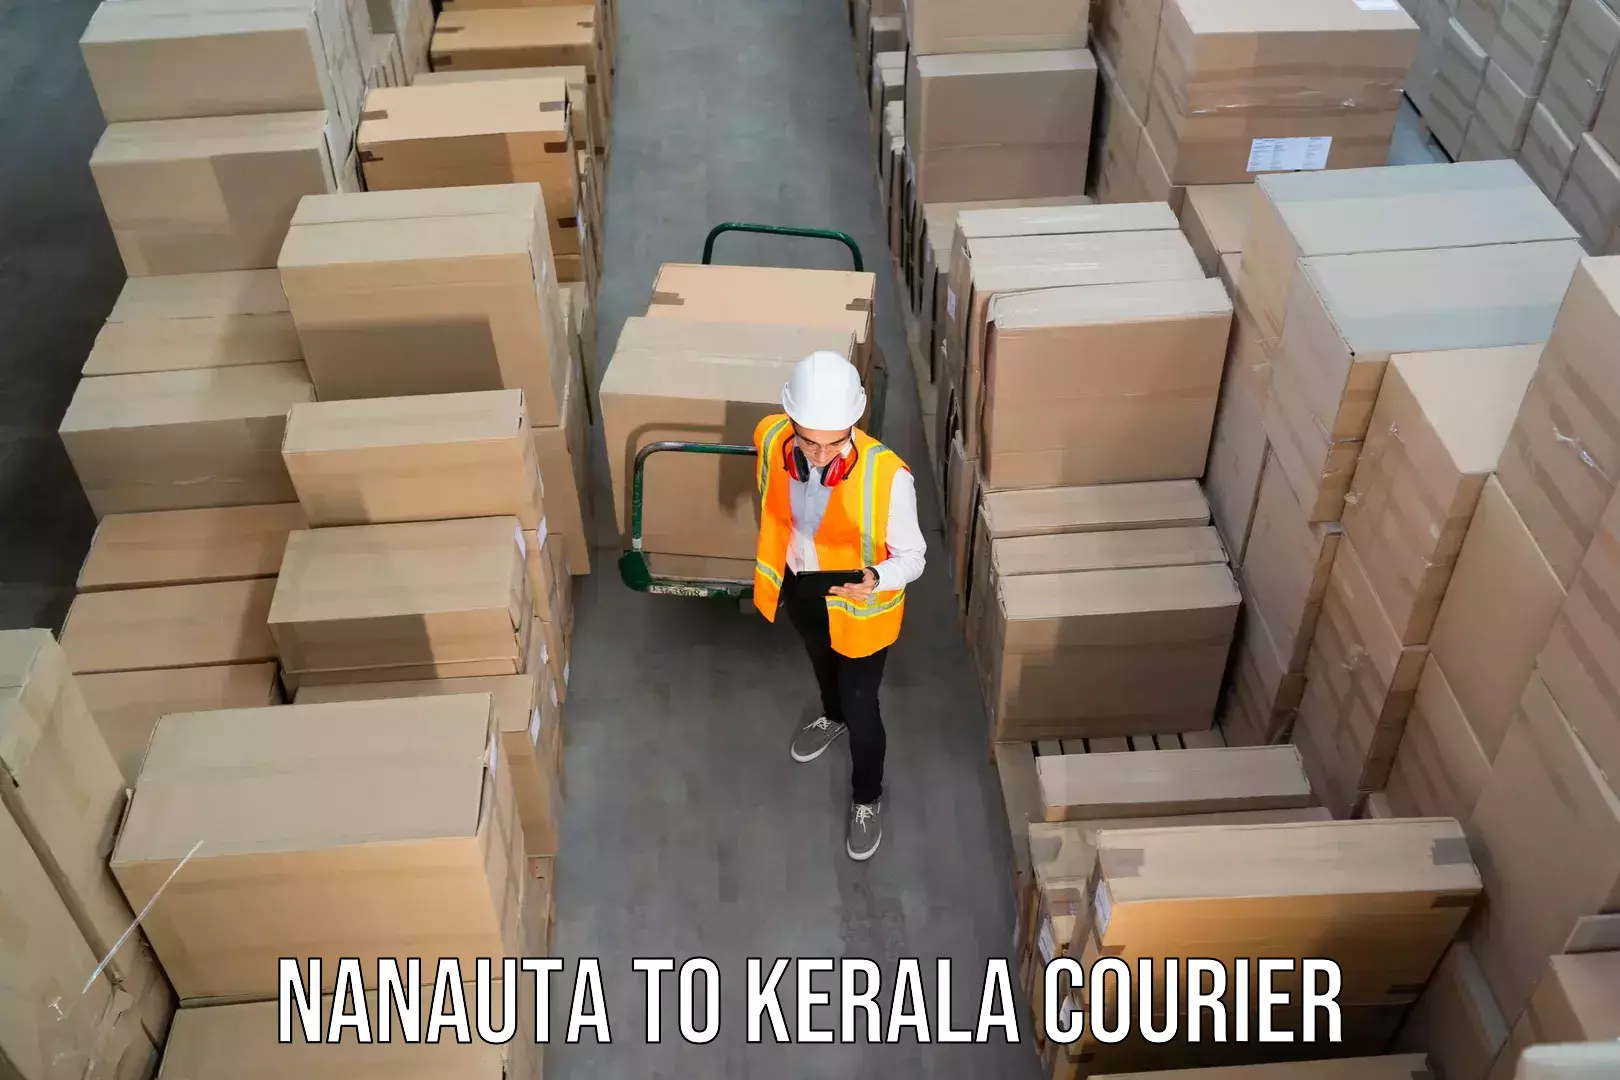 Efficient shipping operations Nanauta to Kerala